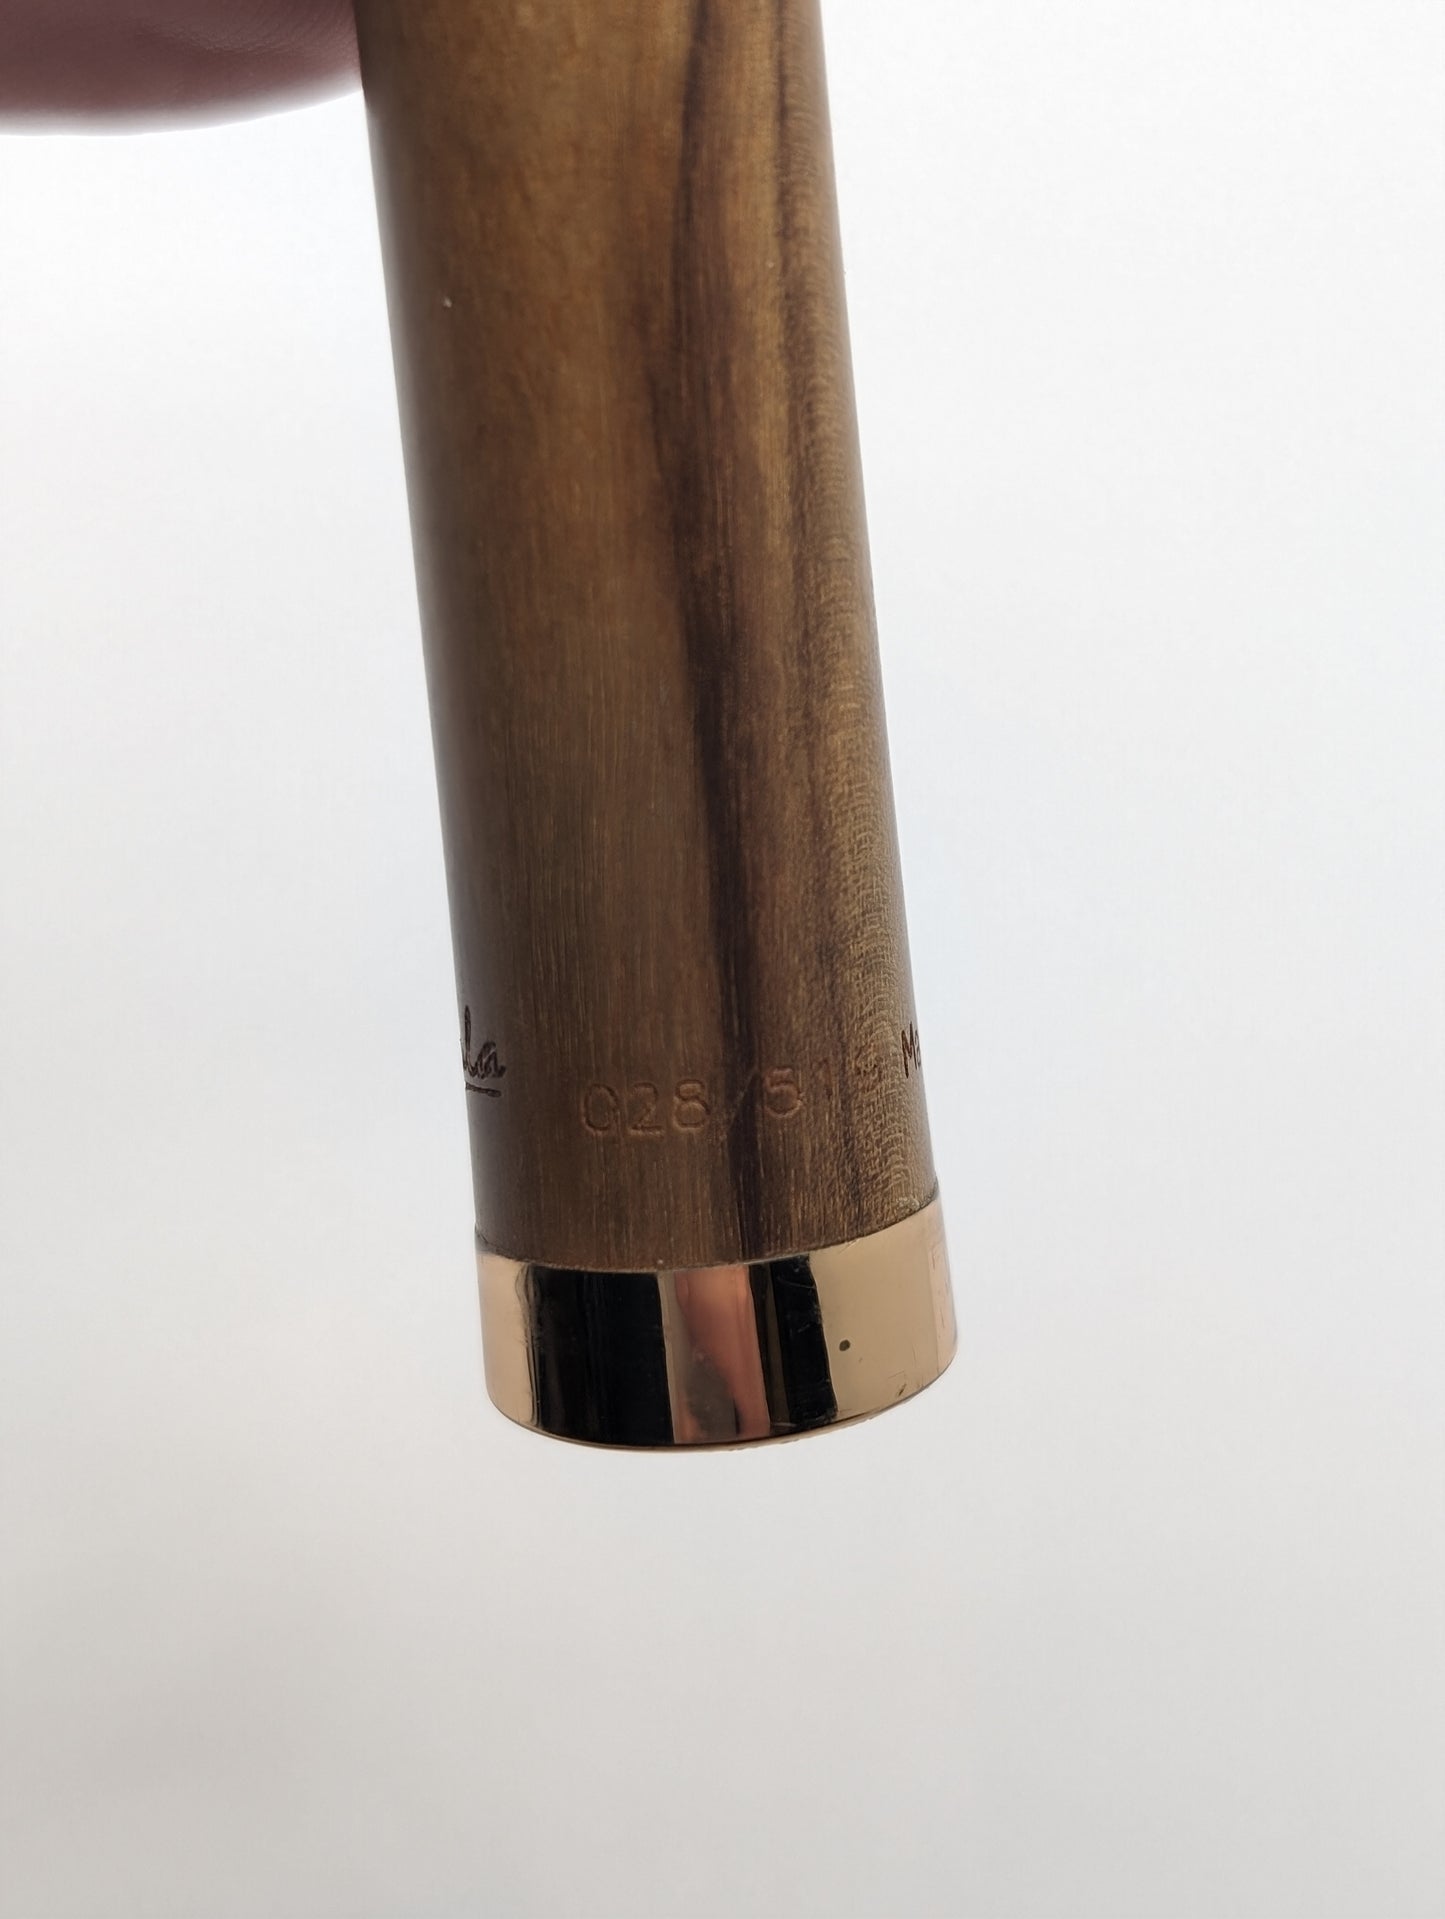 Stipula Leonardo Da Vinci Twister Capless Olive Wood Limited Edition Ballpoint Pen 28 of 519